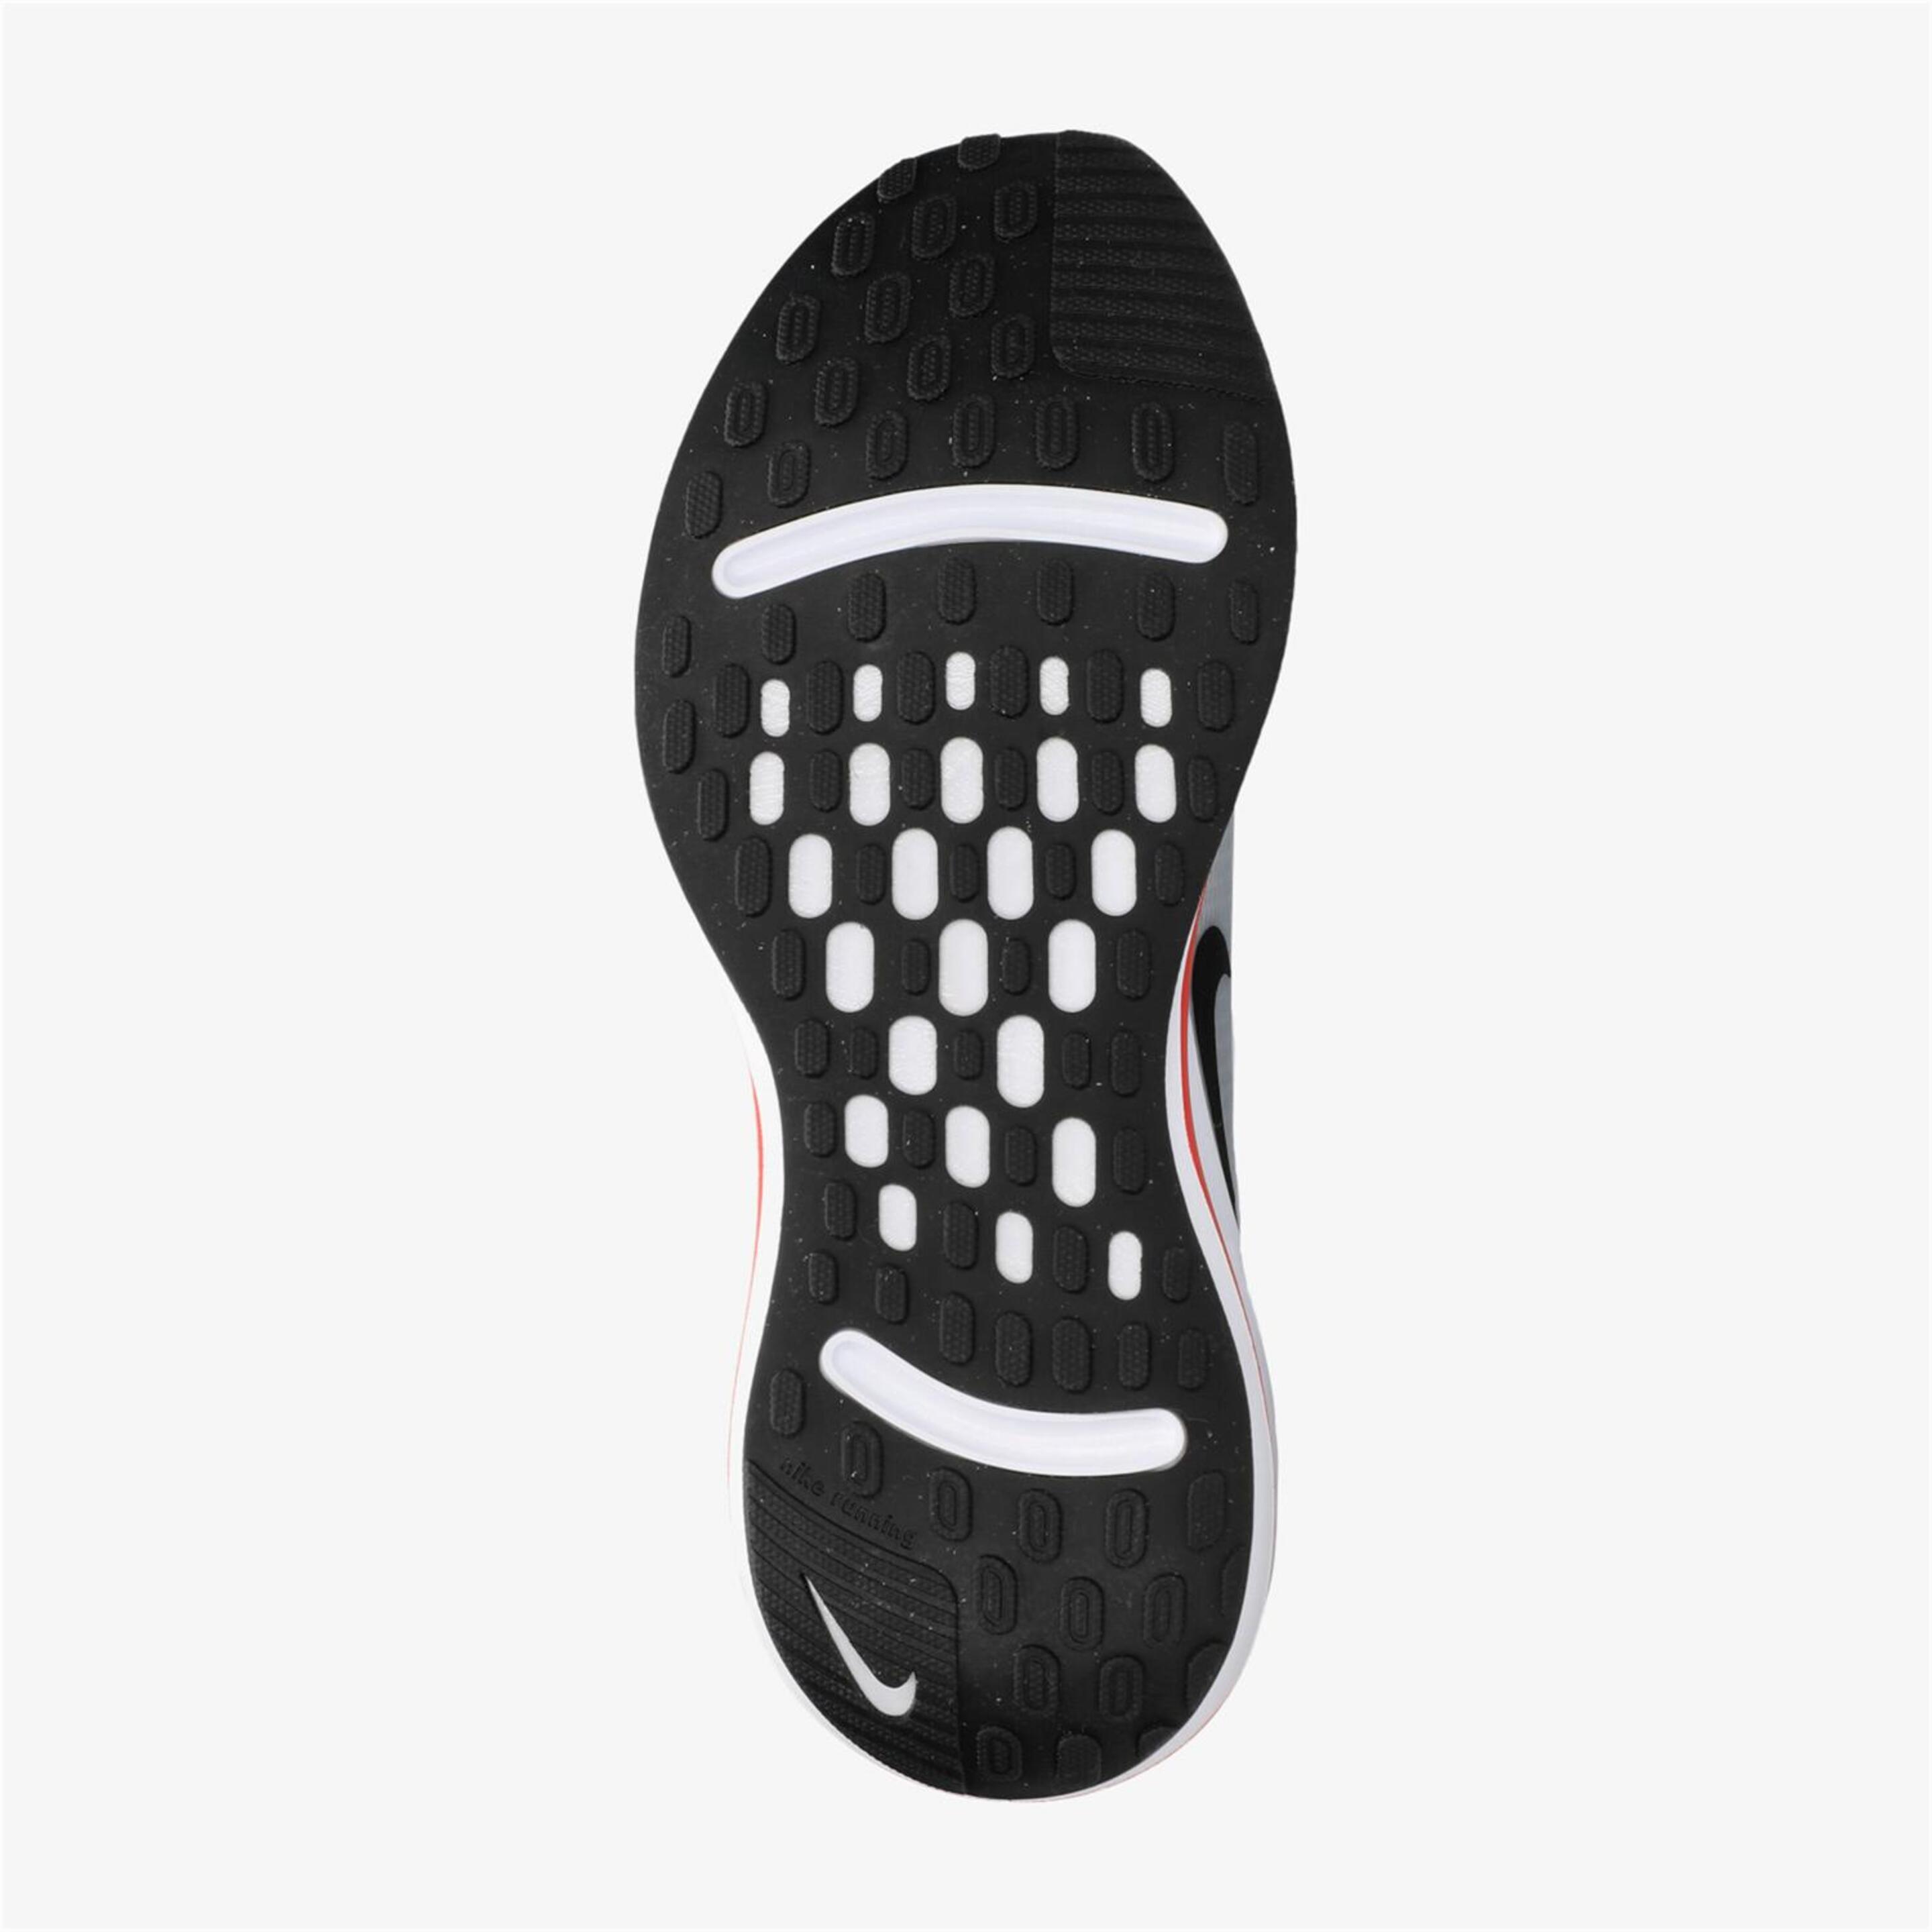 Nike Journey - Blanco - Zapatillas Running Hombre